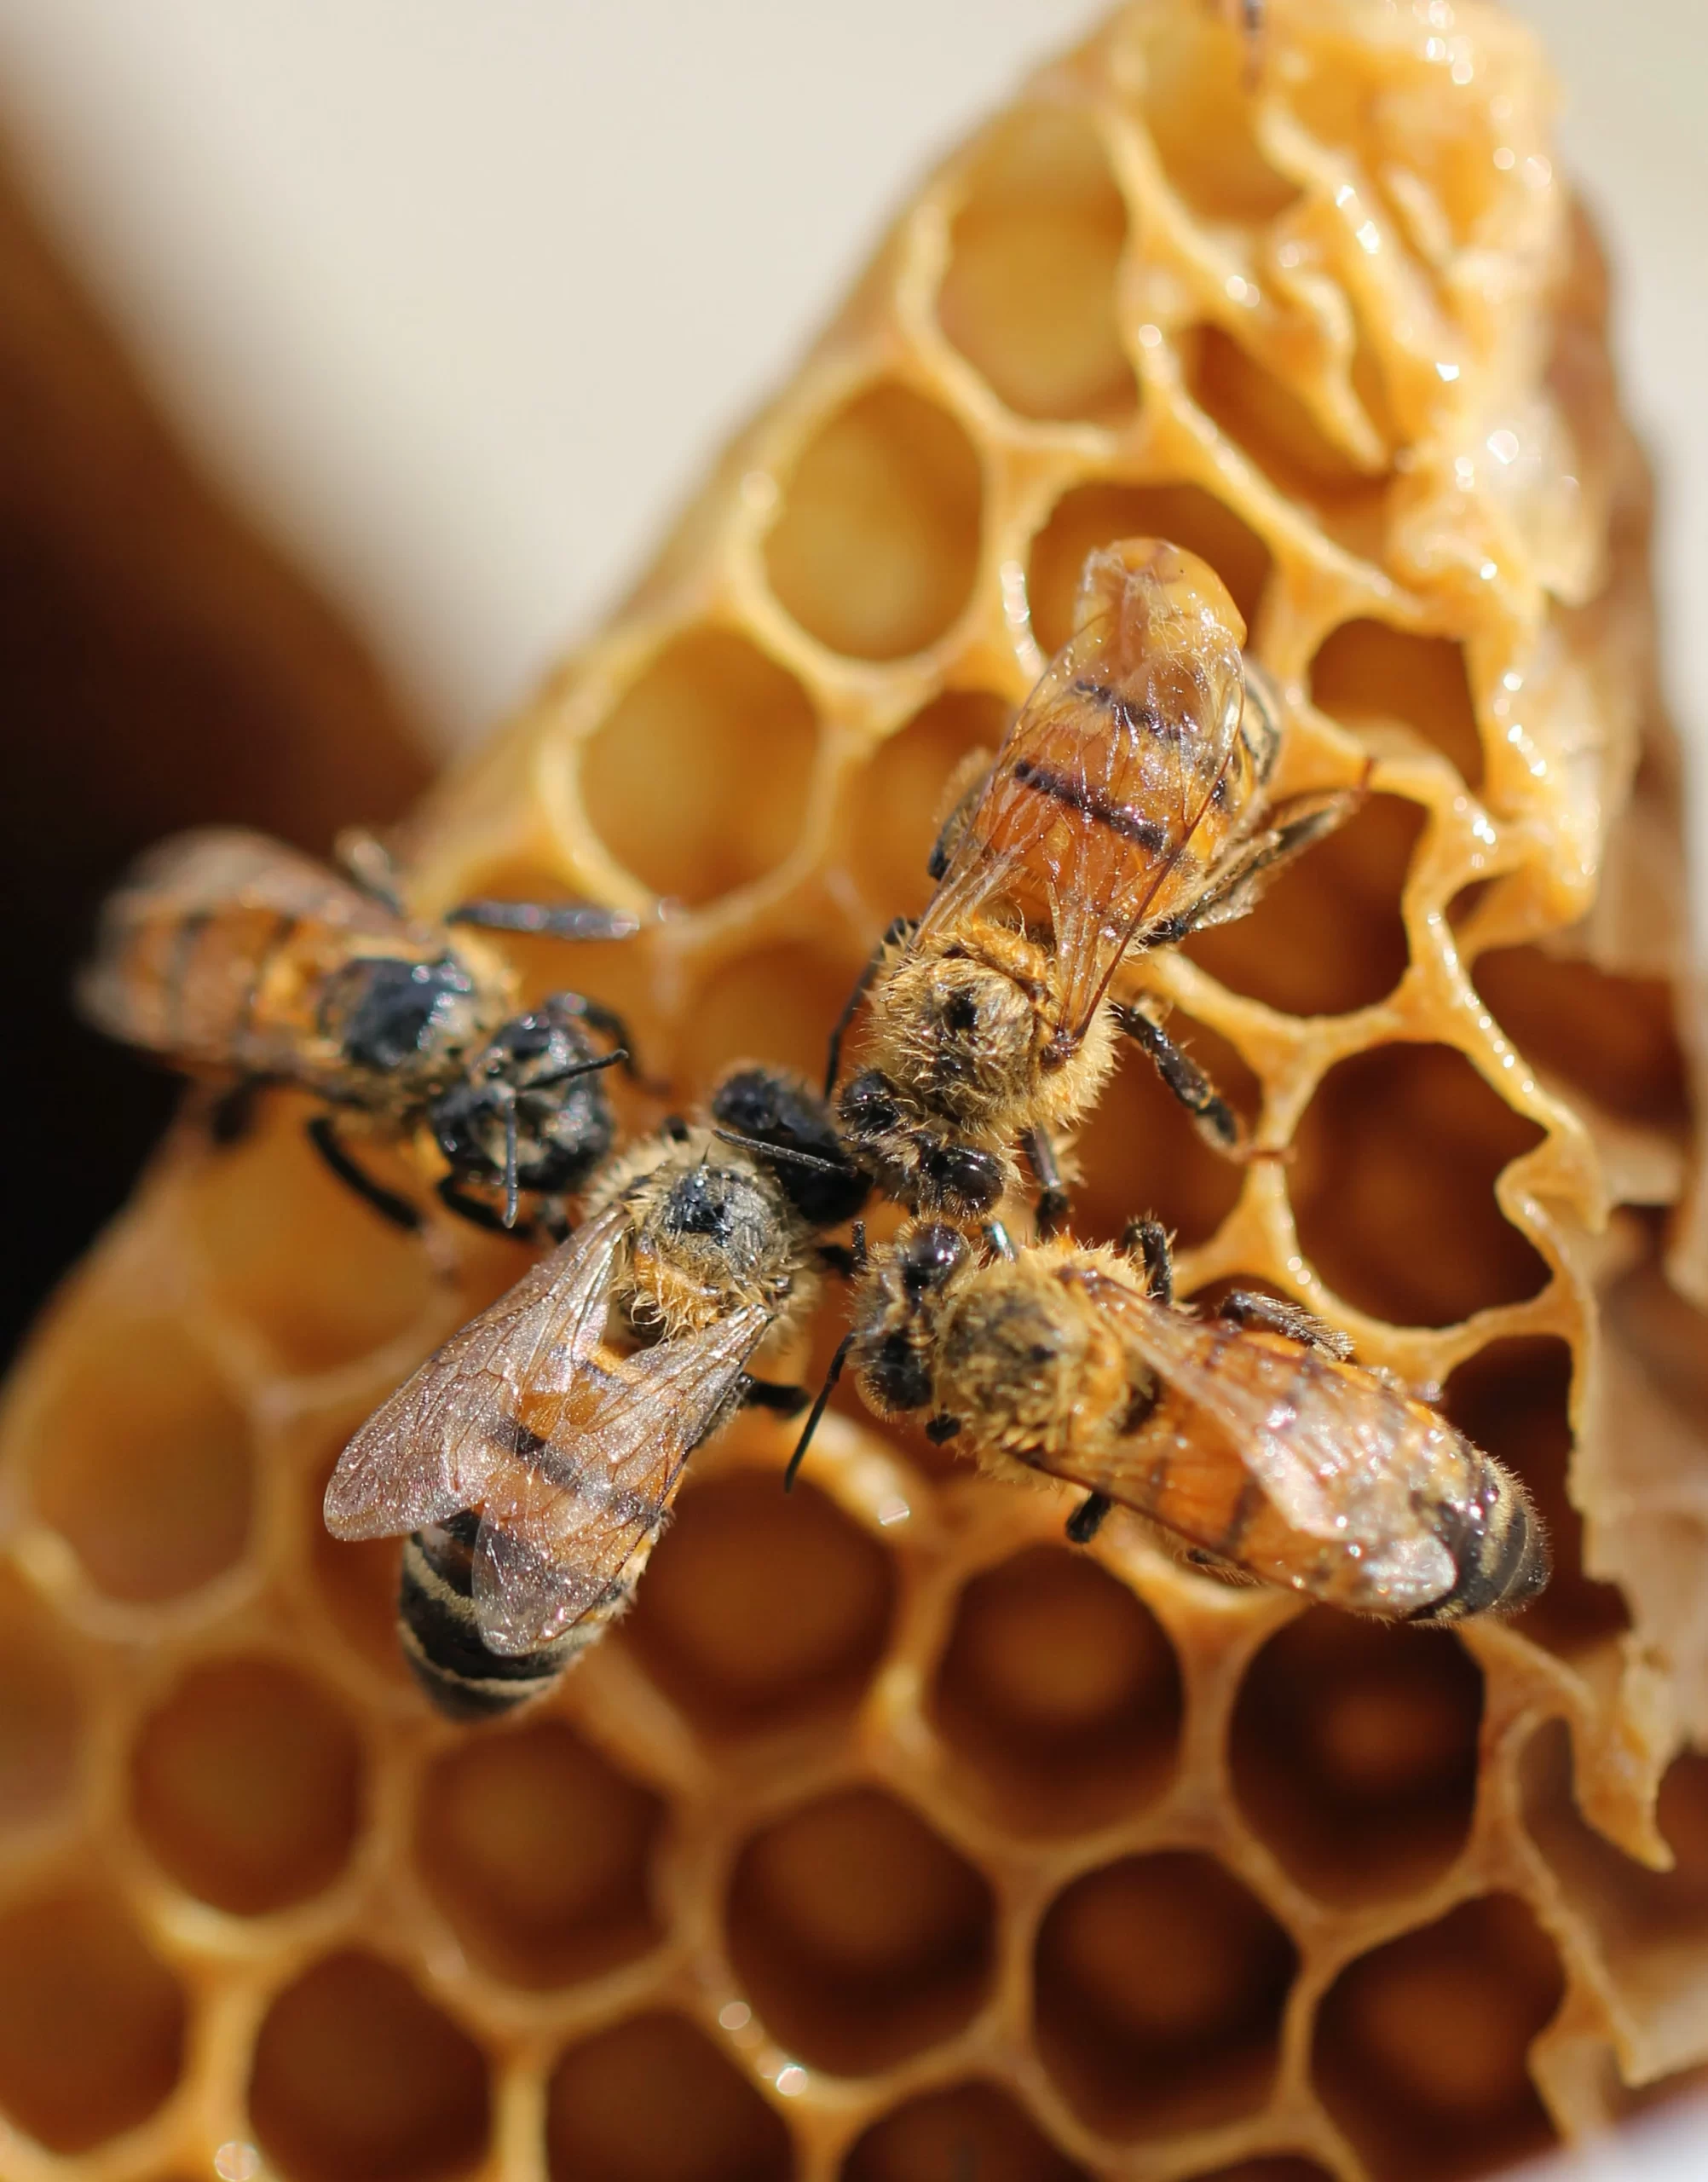 shelby-cohron-Honey bees feeding Queen on comb-unsplash (1)